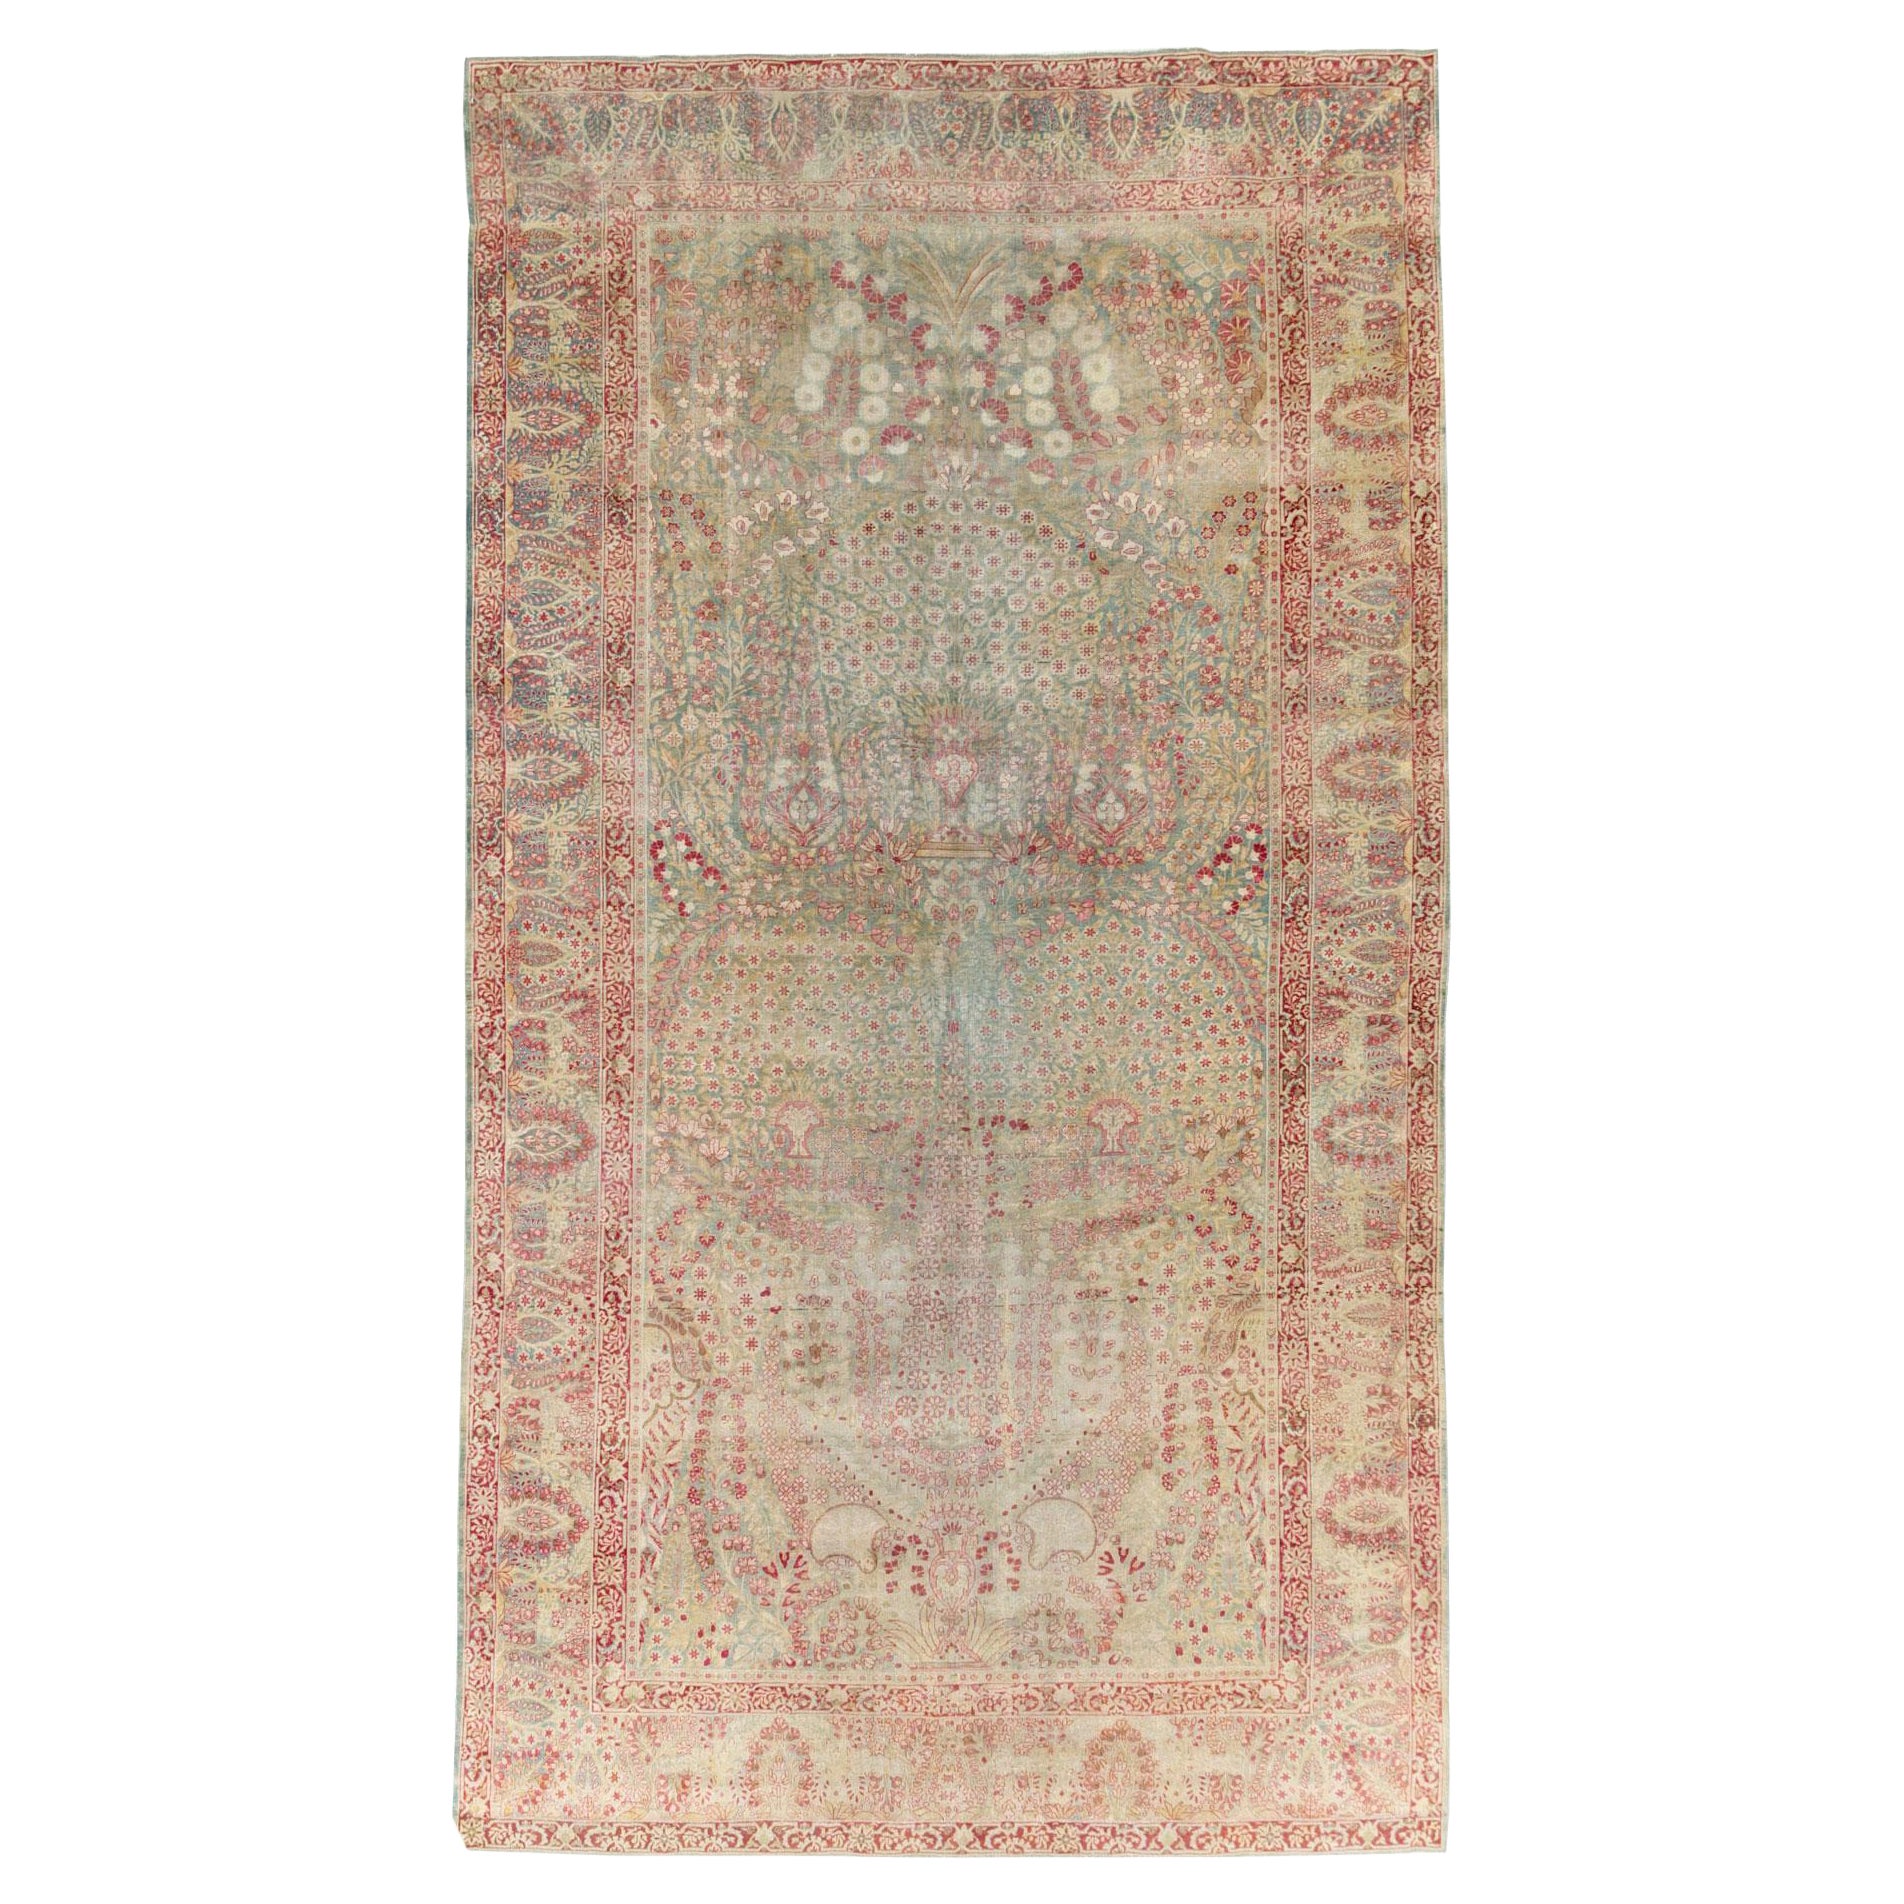 Early 20th Century Handmade Persian Lavar Kerman Gallery Carpet